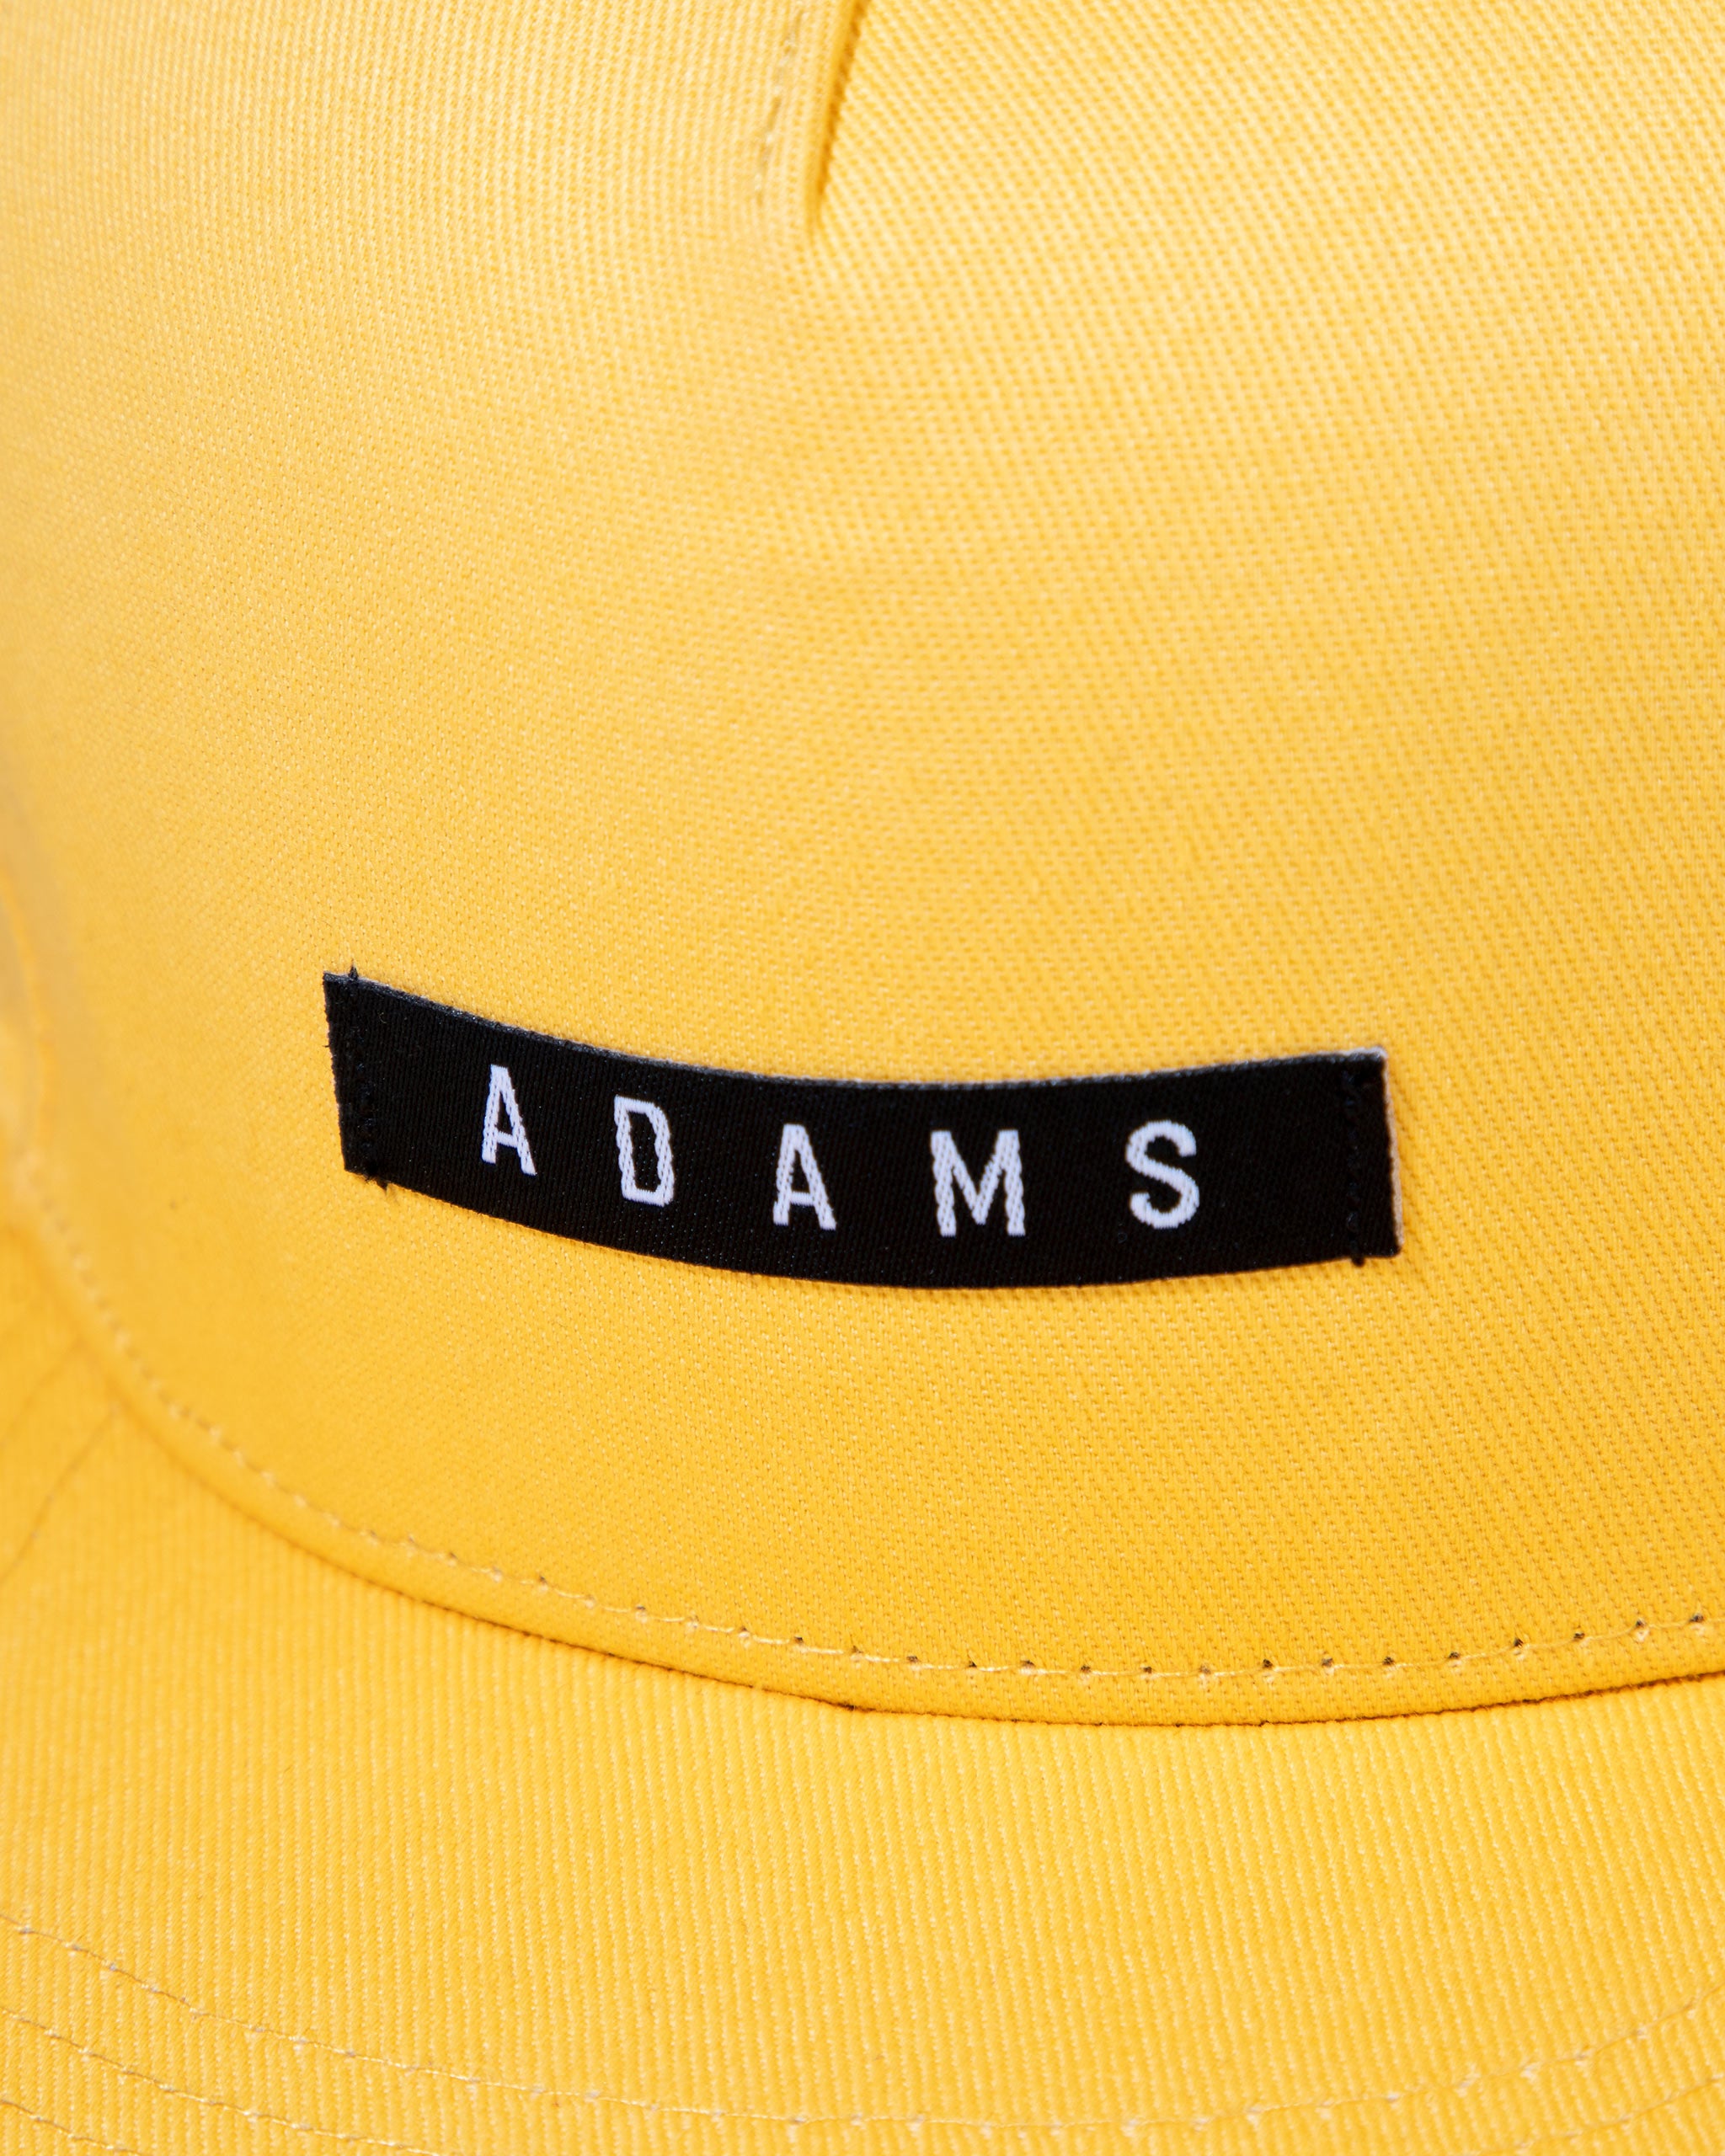 Adam's Yellow Flat Bill Hat